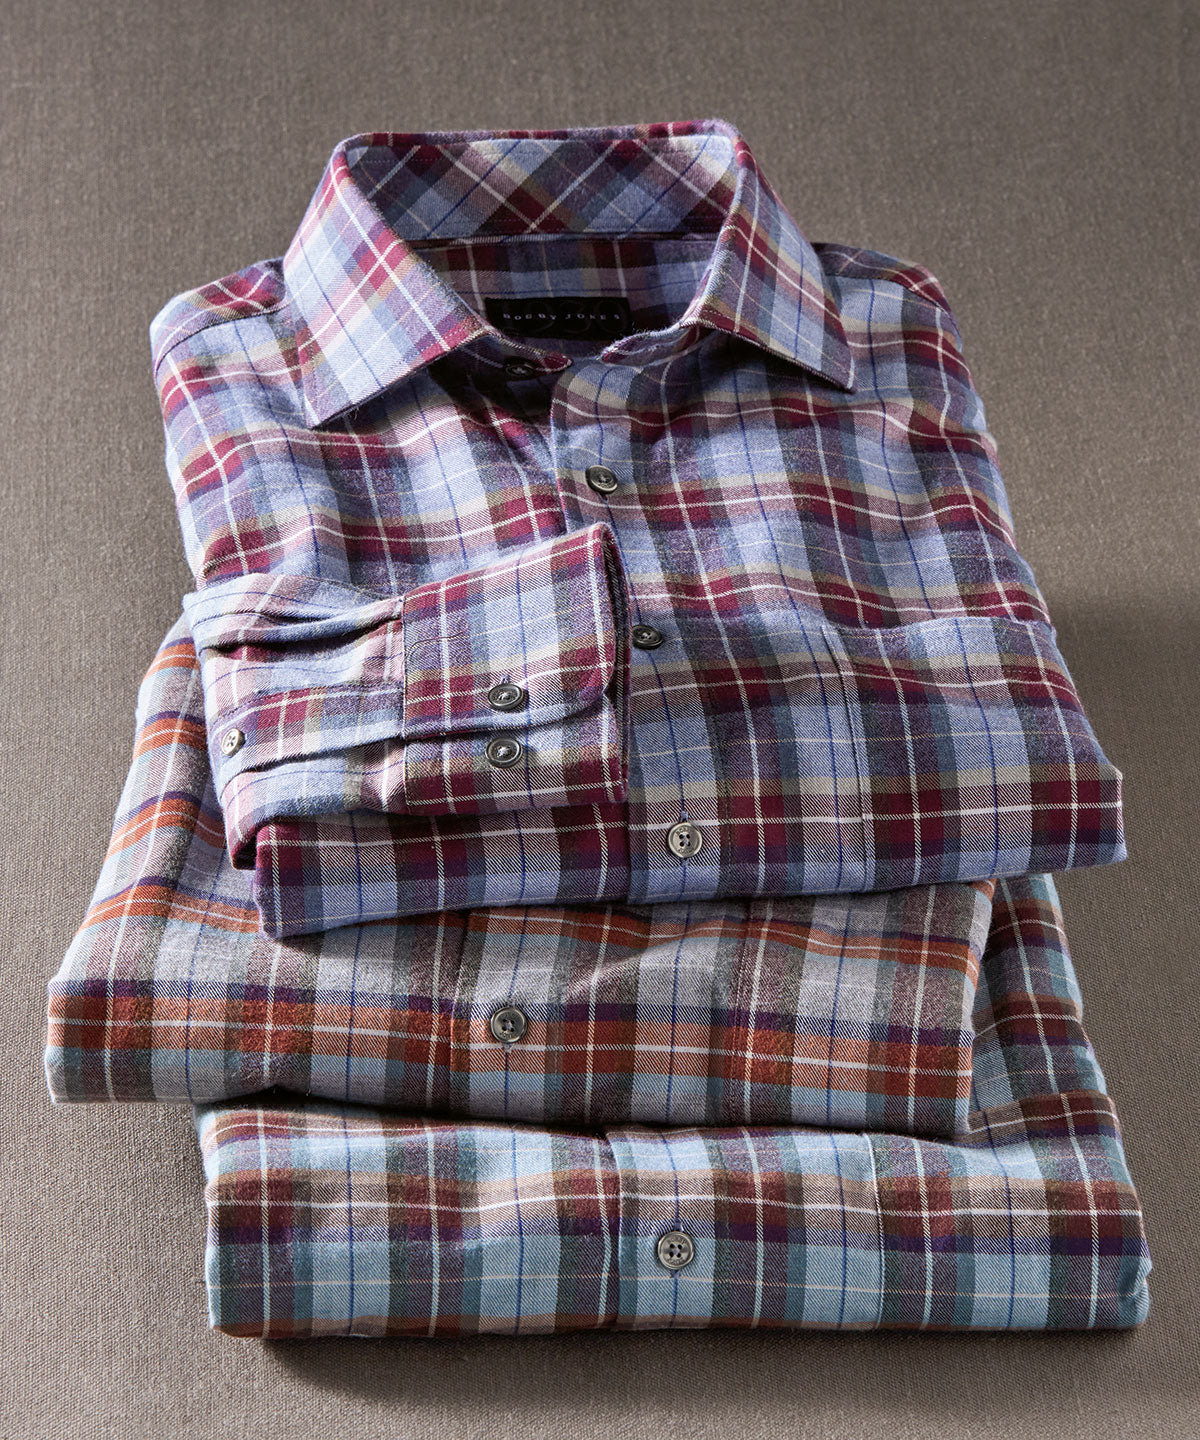 Charles Brushed Cotton Plaid Long Sleeve Sport Shirt - Bobby Jones